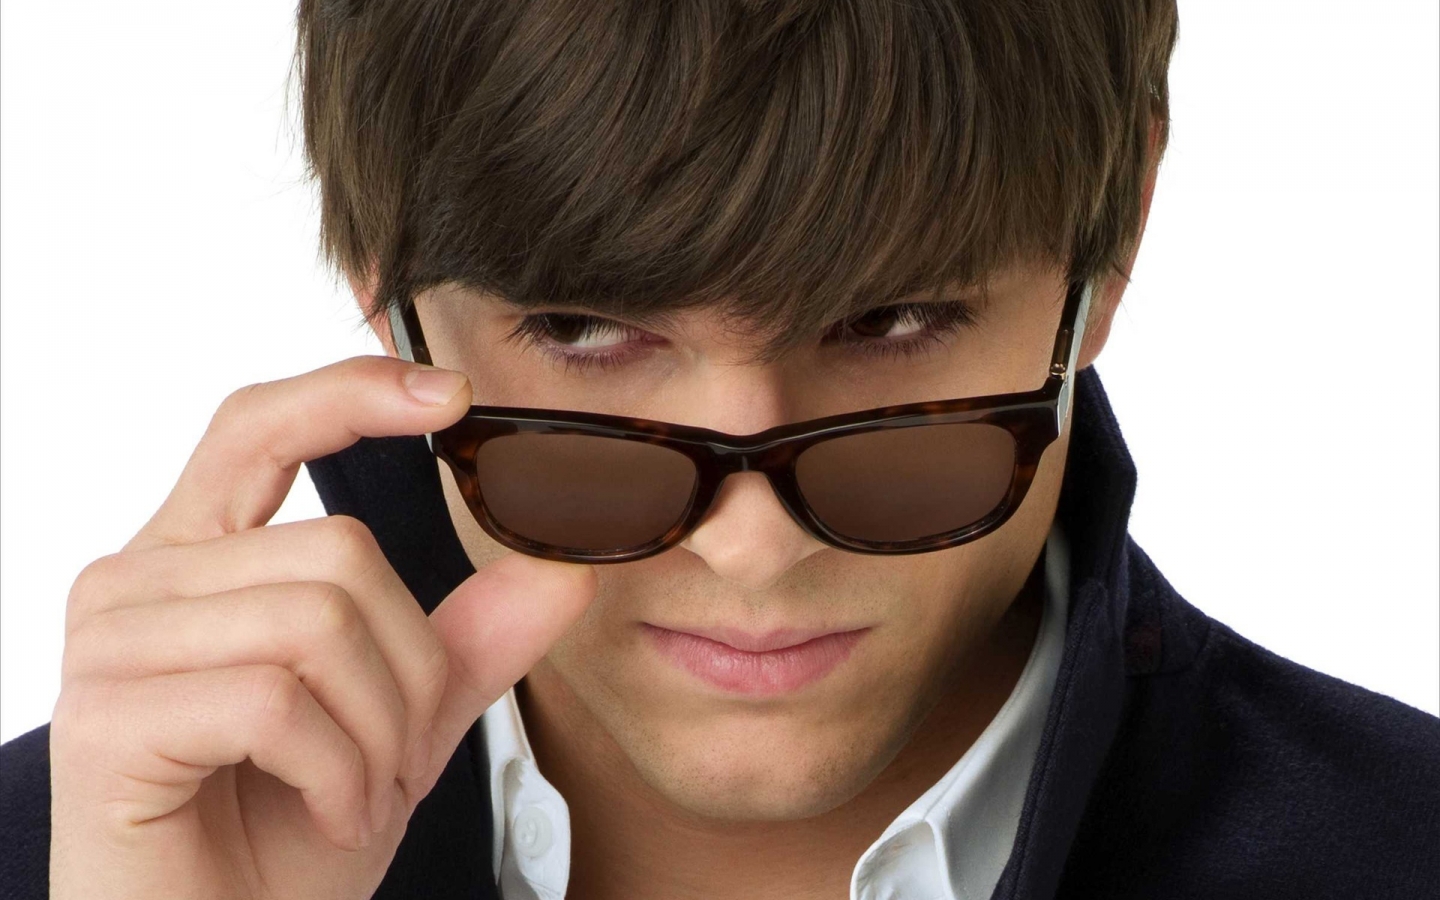 Ashton Kutcher with Sunglasses for 1440 x 900 widescreen resolution